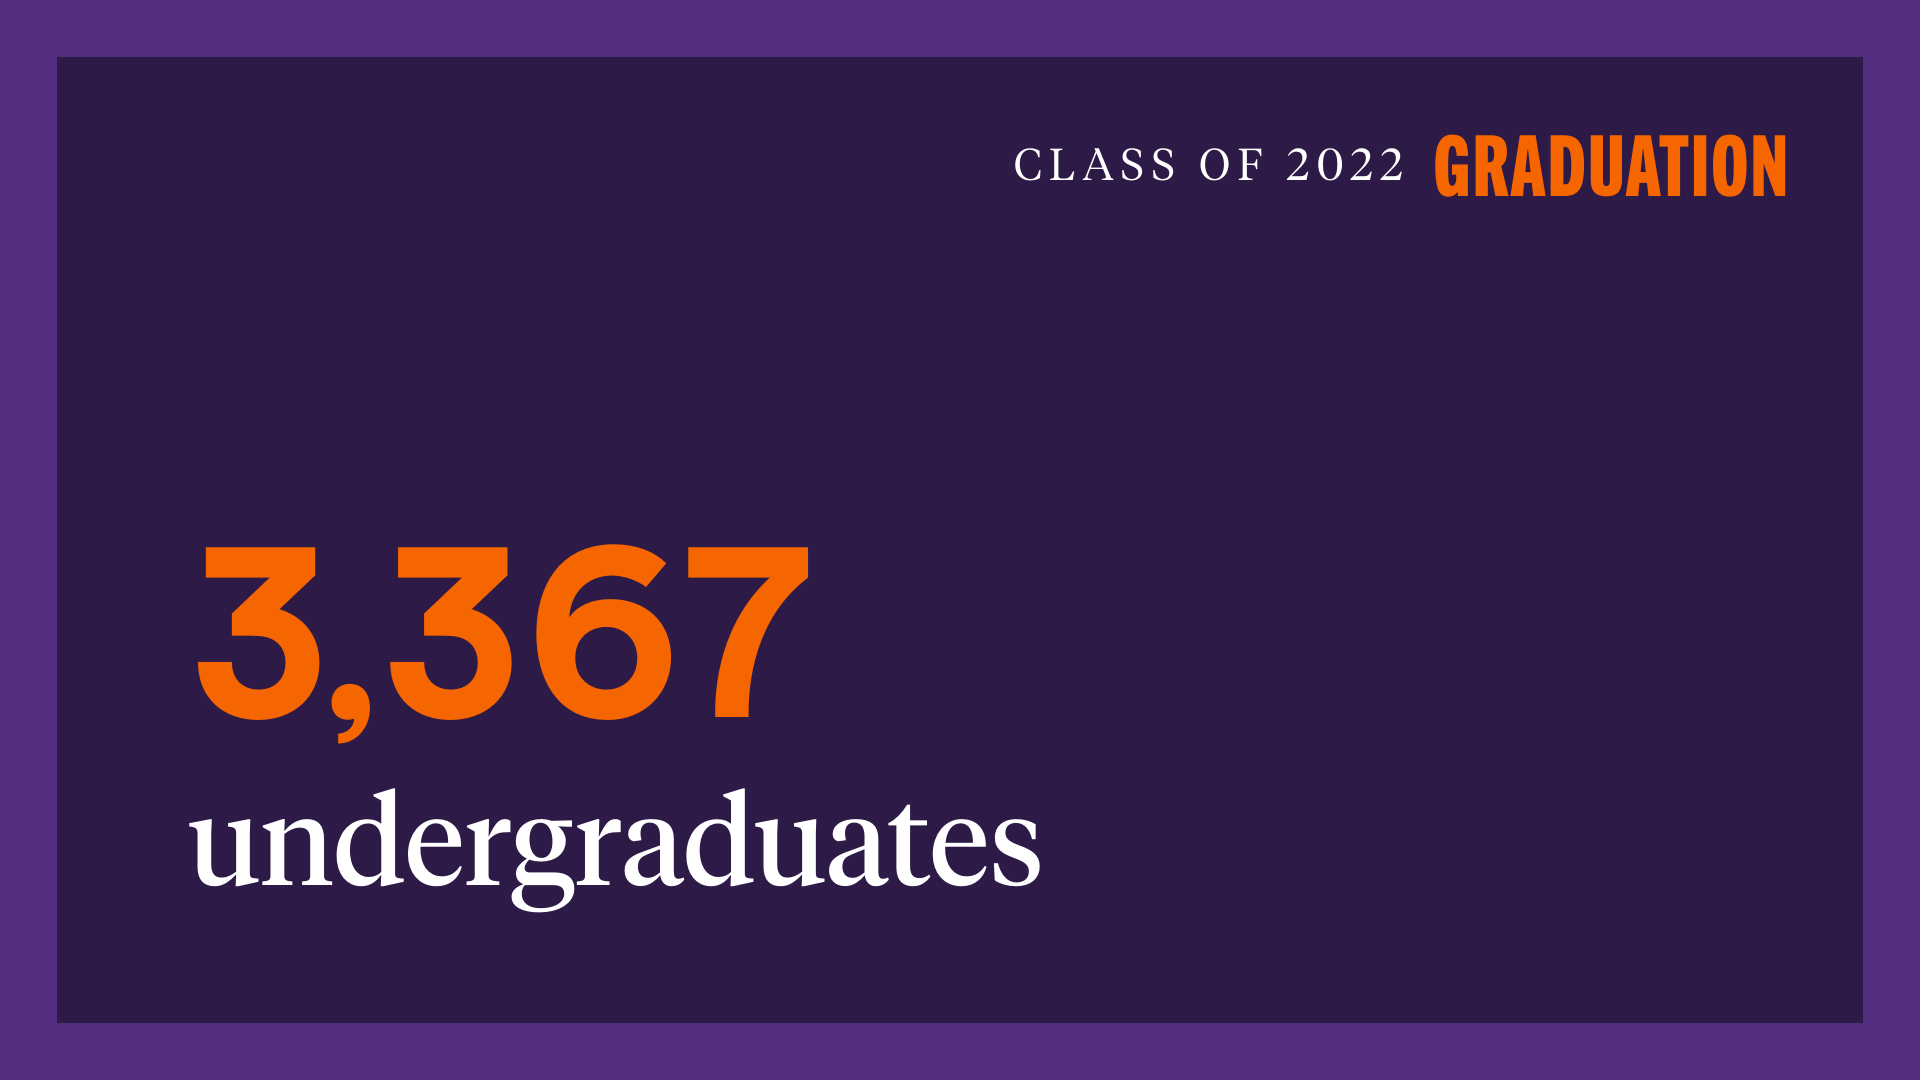 Class of 2022 Graduation: 3367 undergraduates